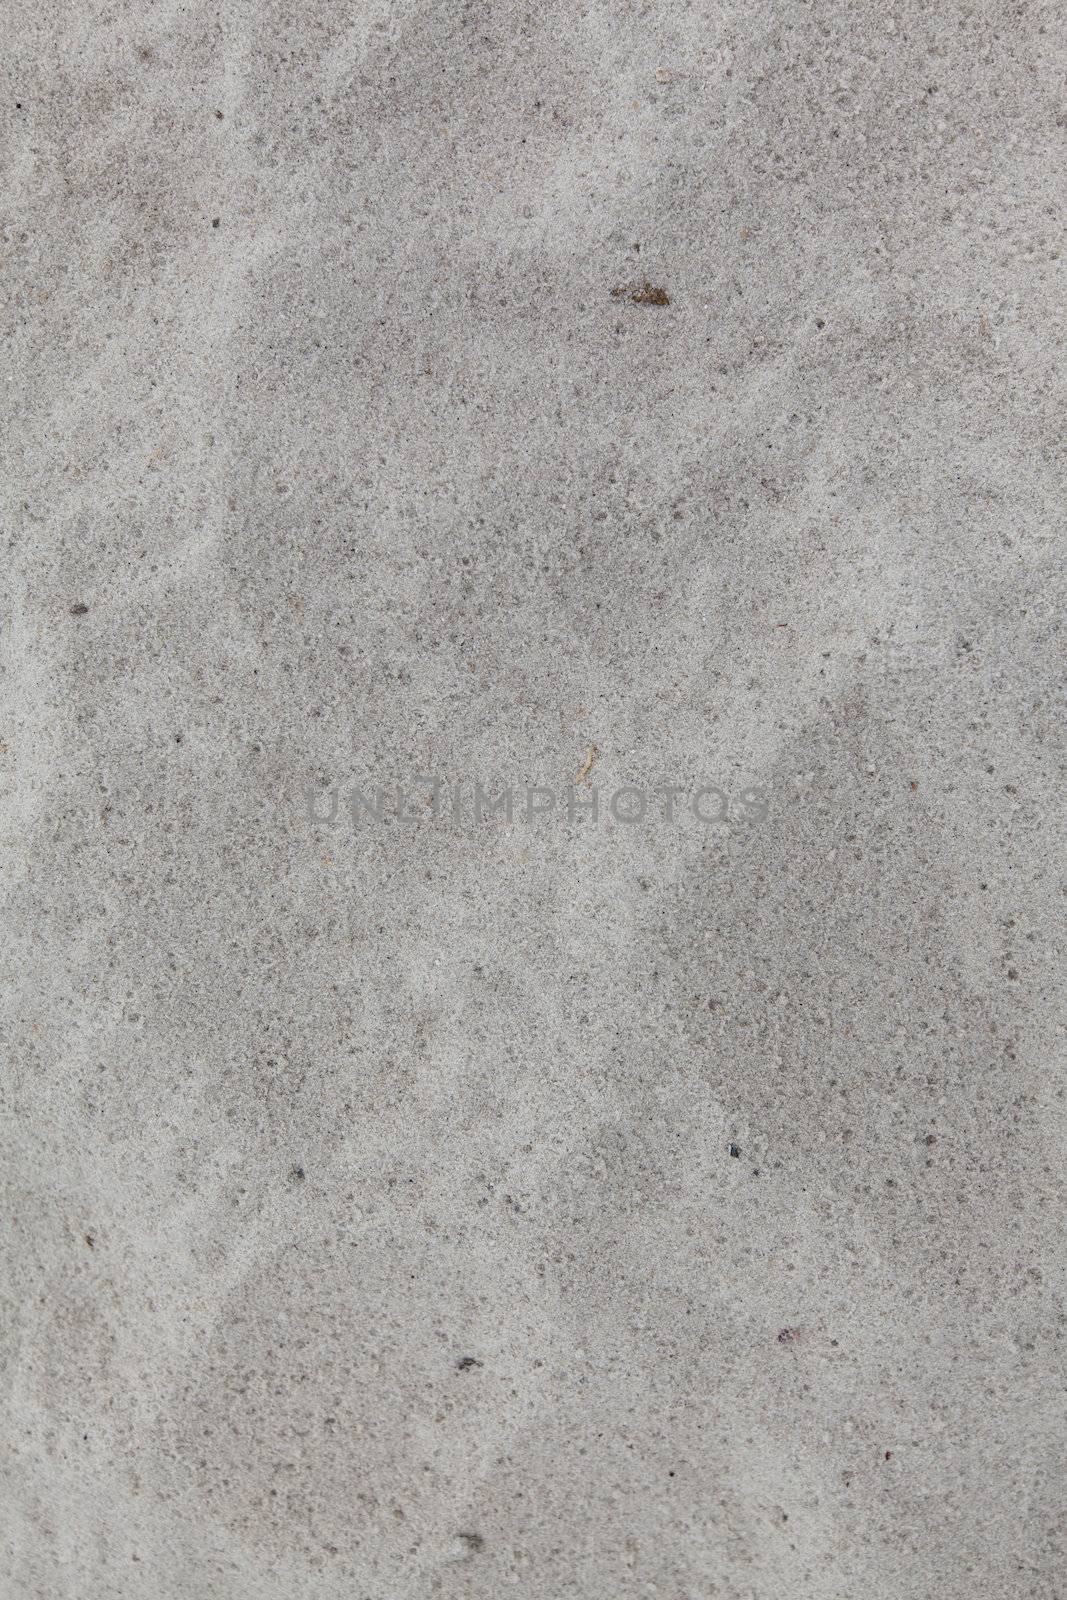 Concrete surface by igor_stramyk